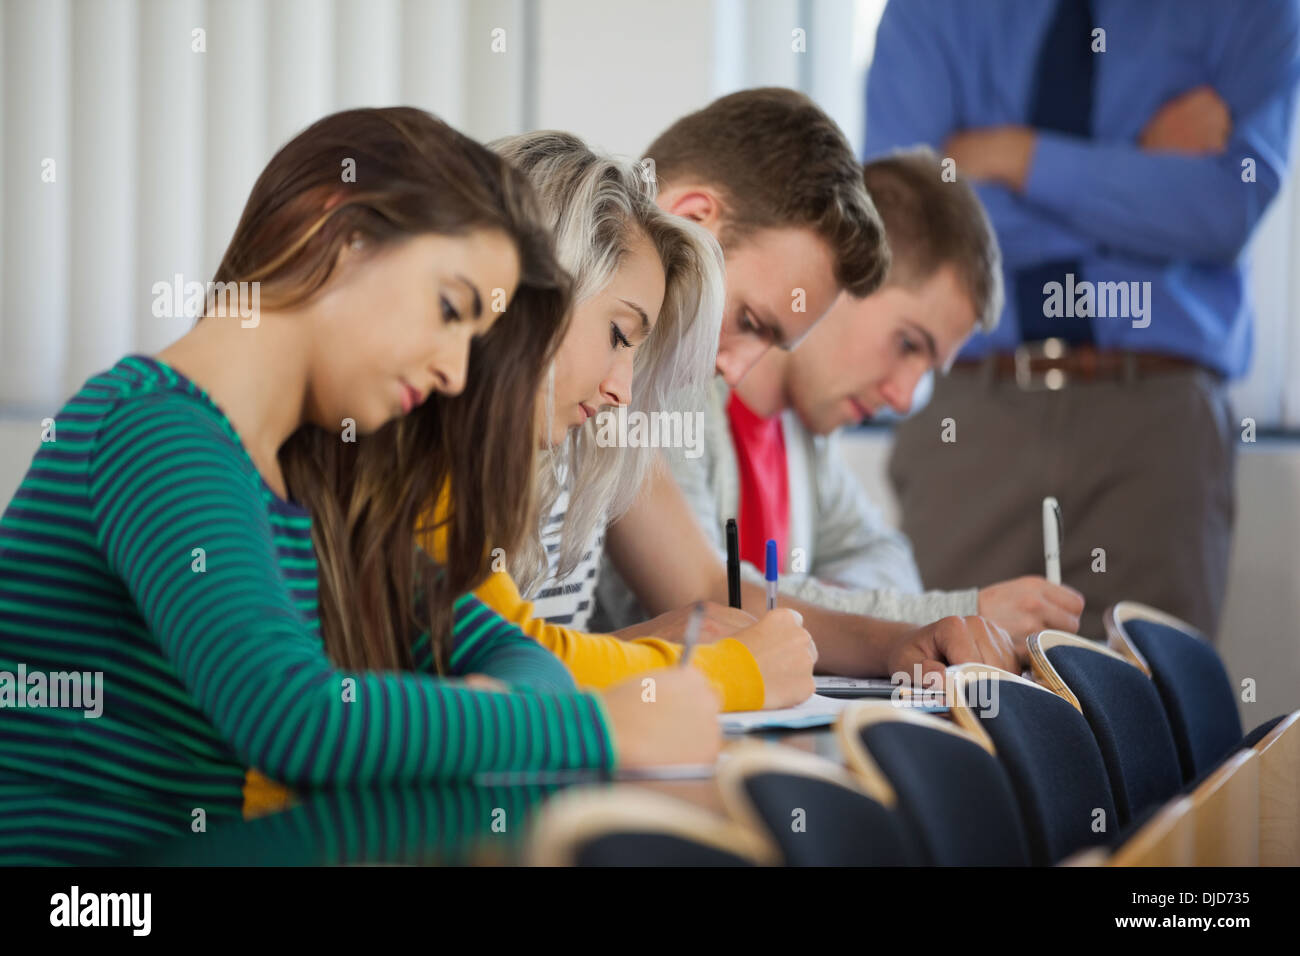 Calm students having an exam Stock Photo